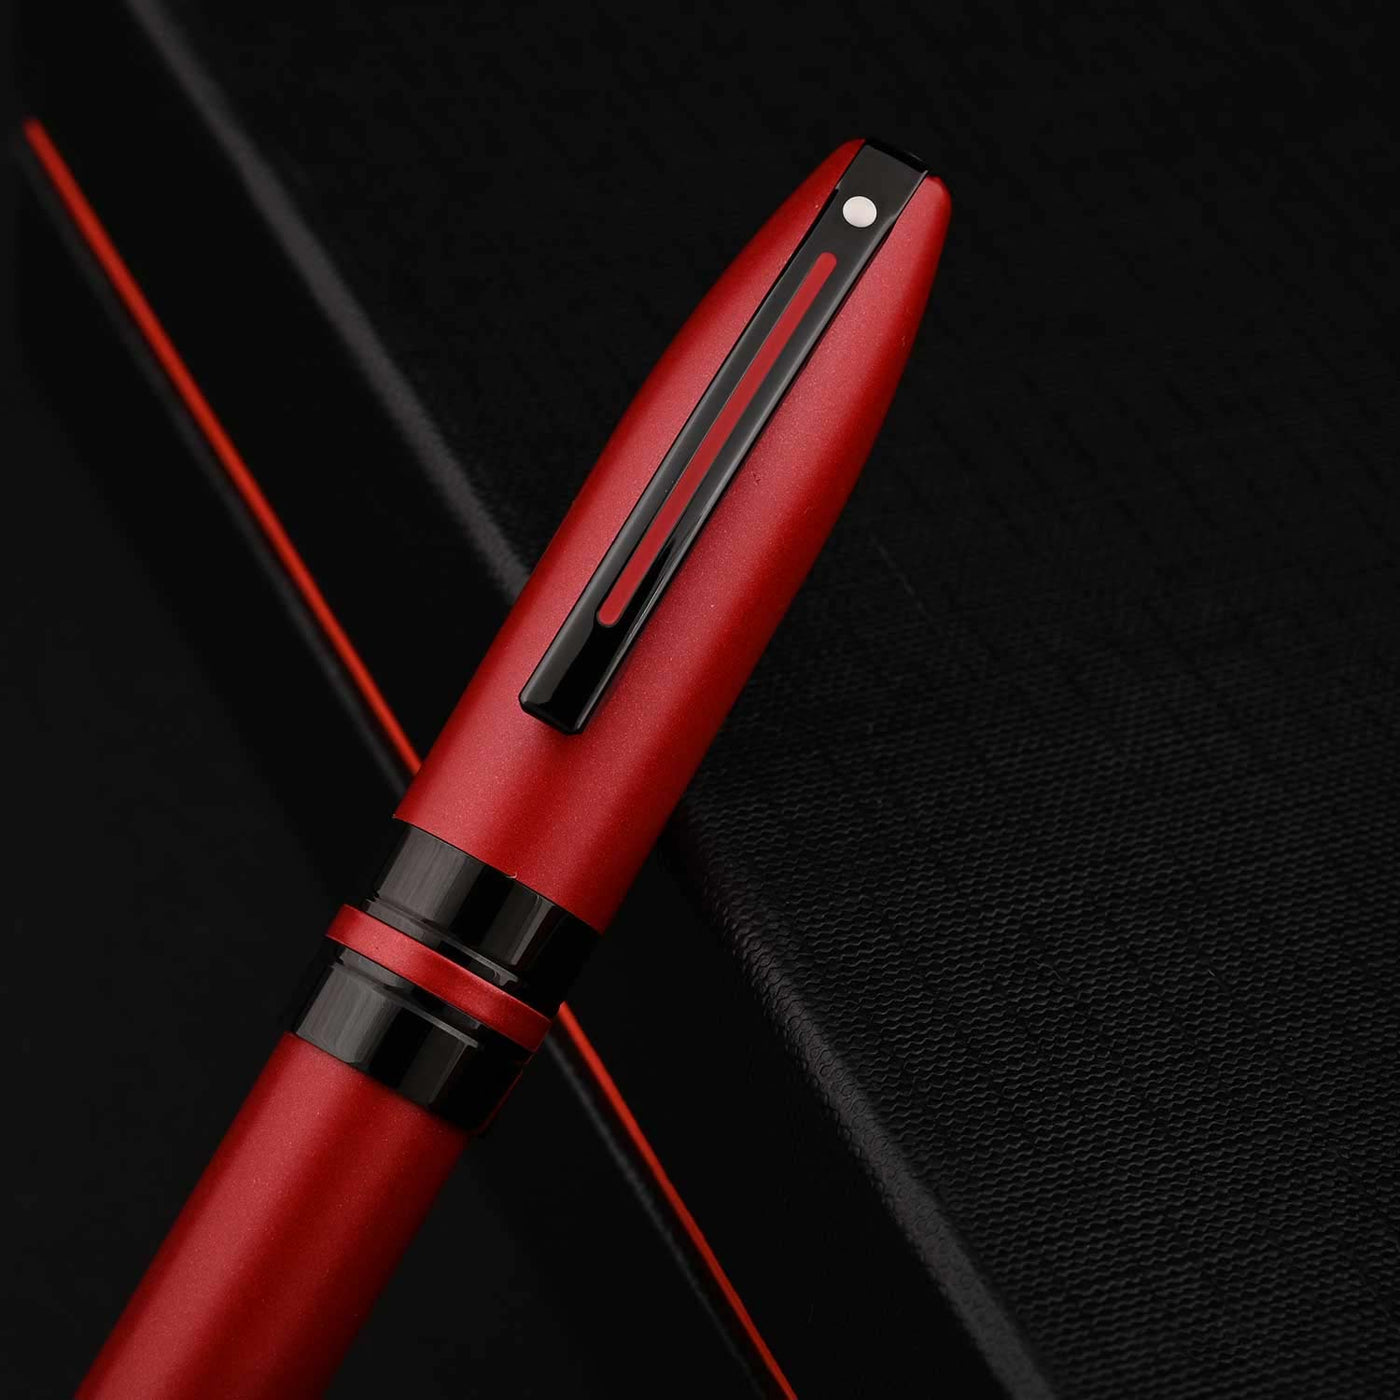 Sheaffer Icon Fountain Pen - Metallic Red PVD